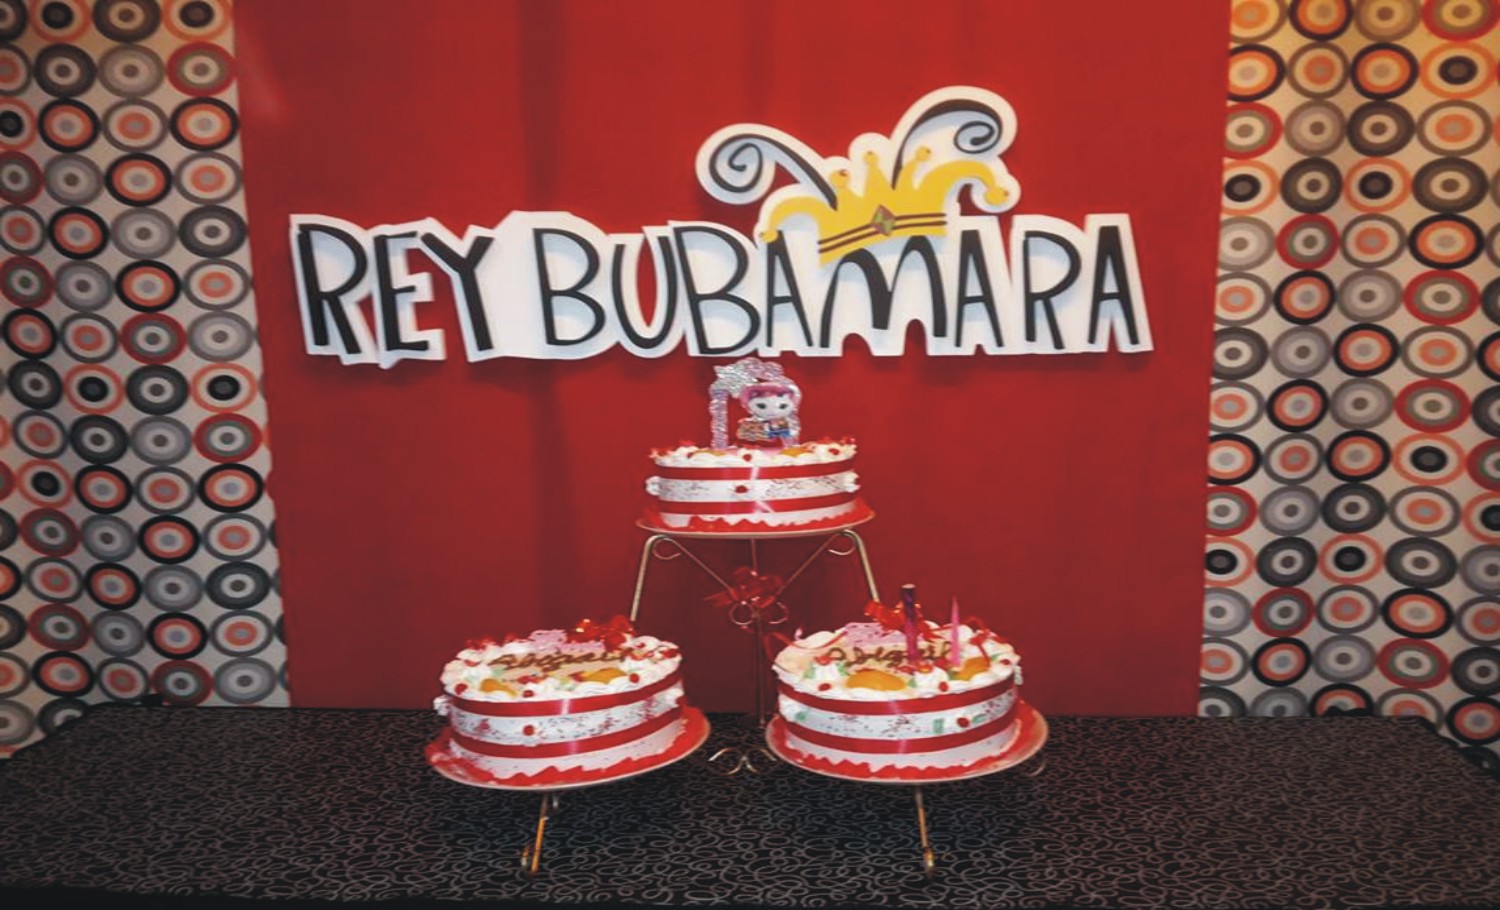 REY BUBAMARA